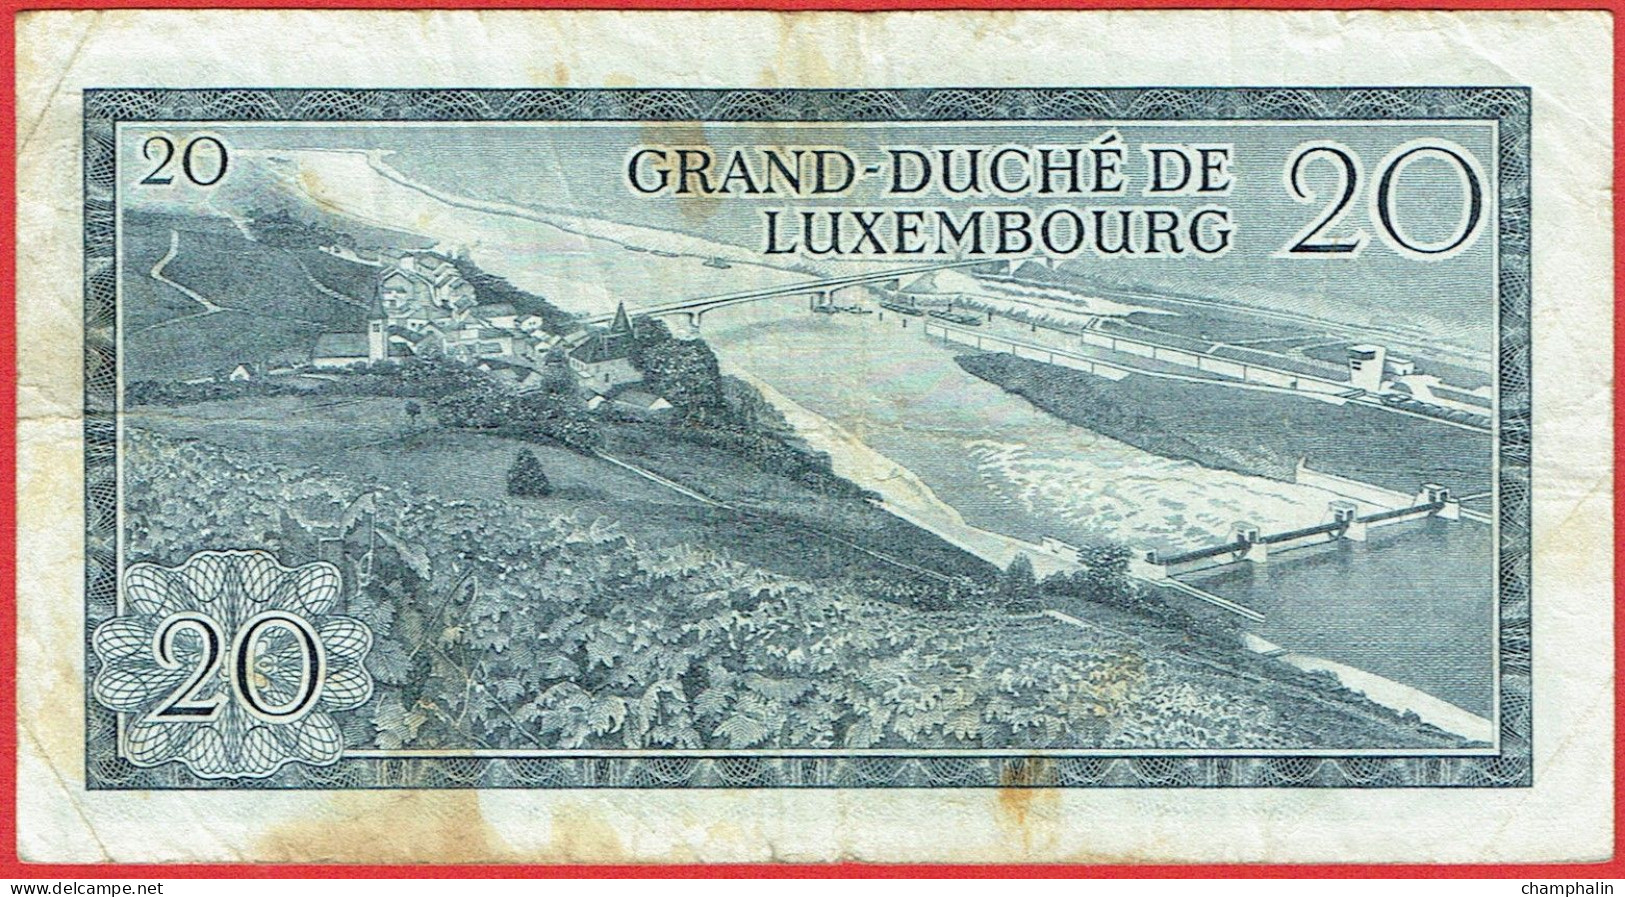 Luxembourg - Billet De 20 Francs - 7 Mars 1966 - Grand-Duc Jean - P54 - Lussemburgo